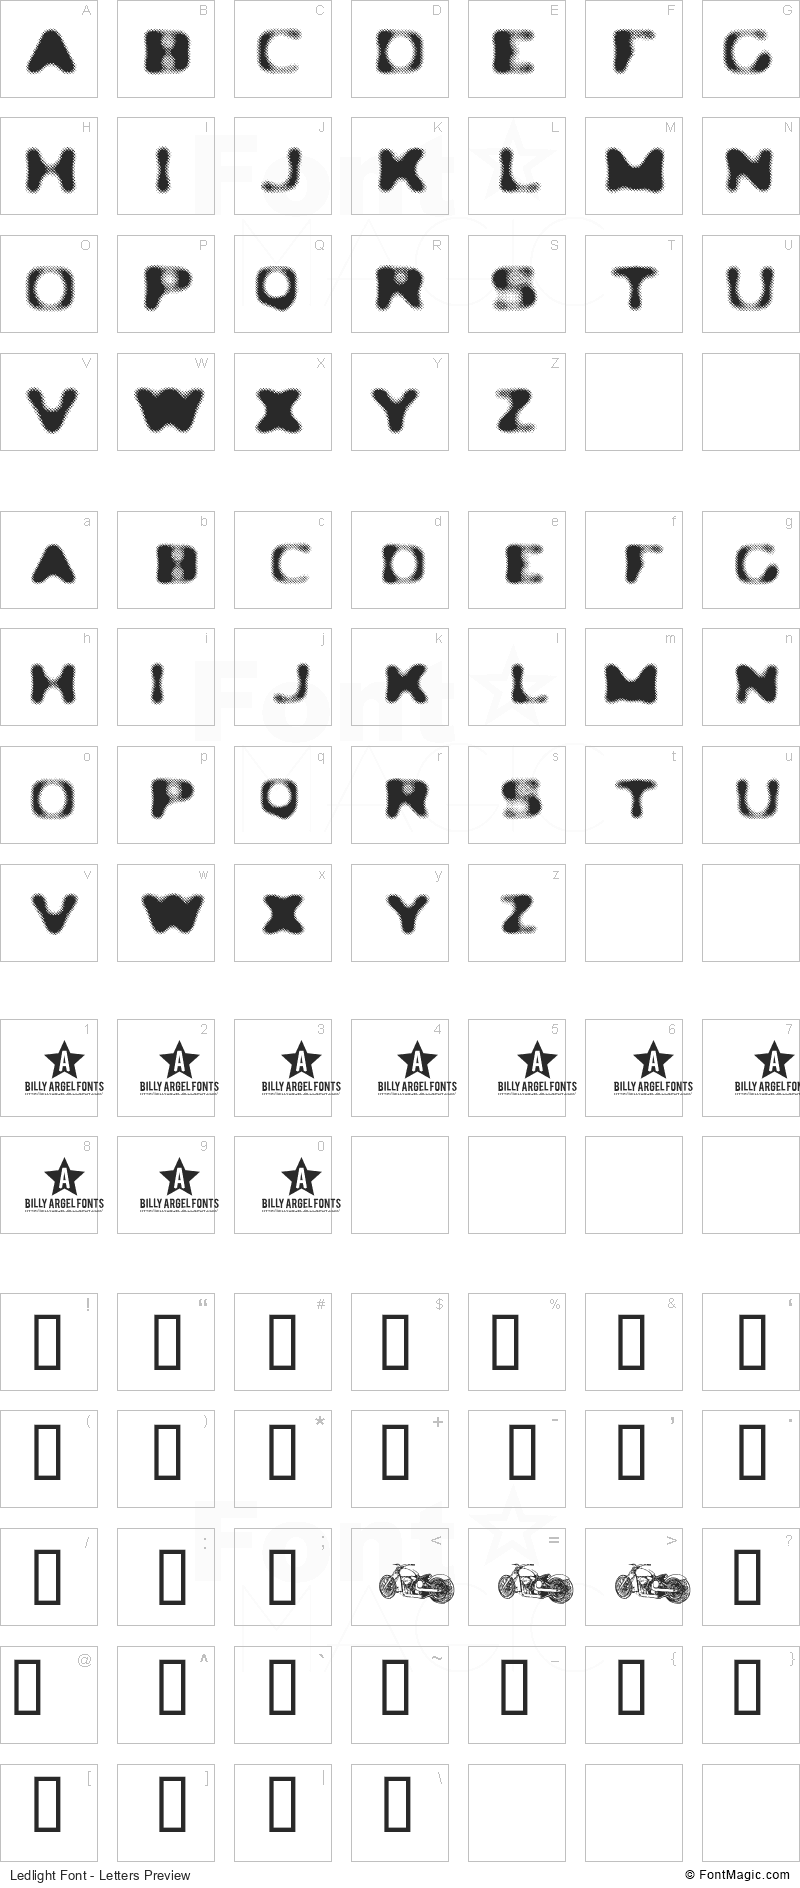 Ledlight Font - All Latters Preview Chart